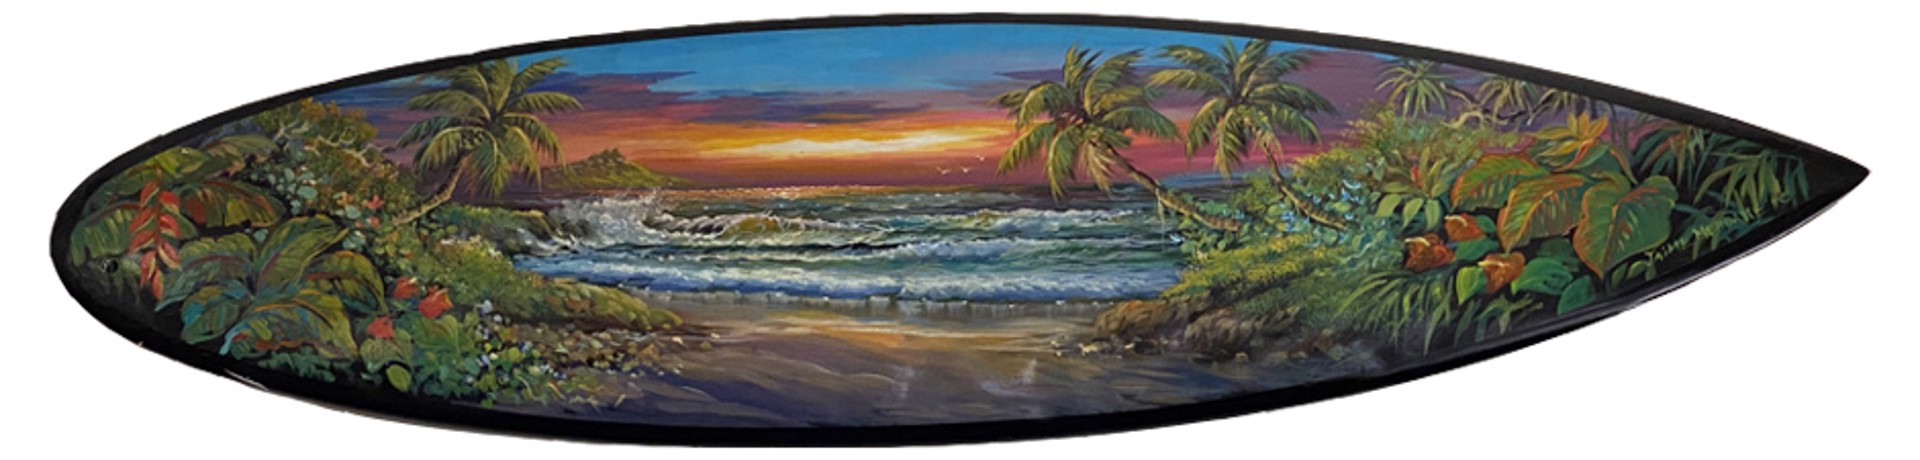 Surfboard Ocean Scene by Jaime T. Mendame